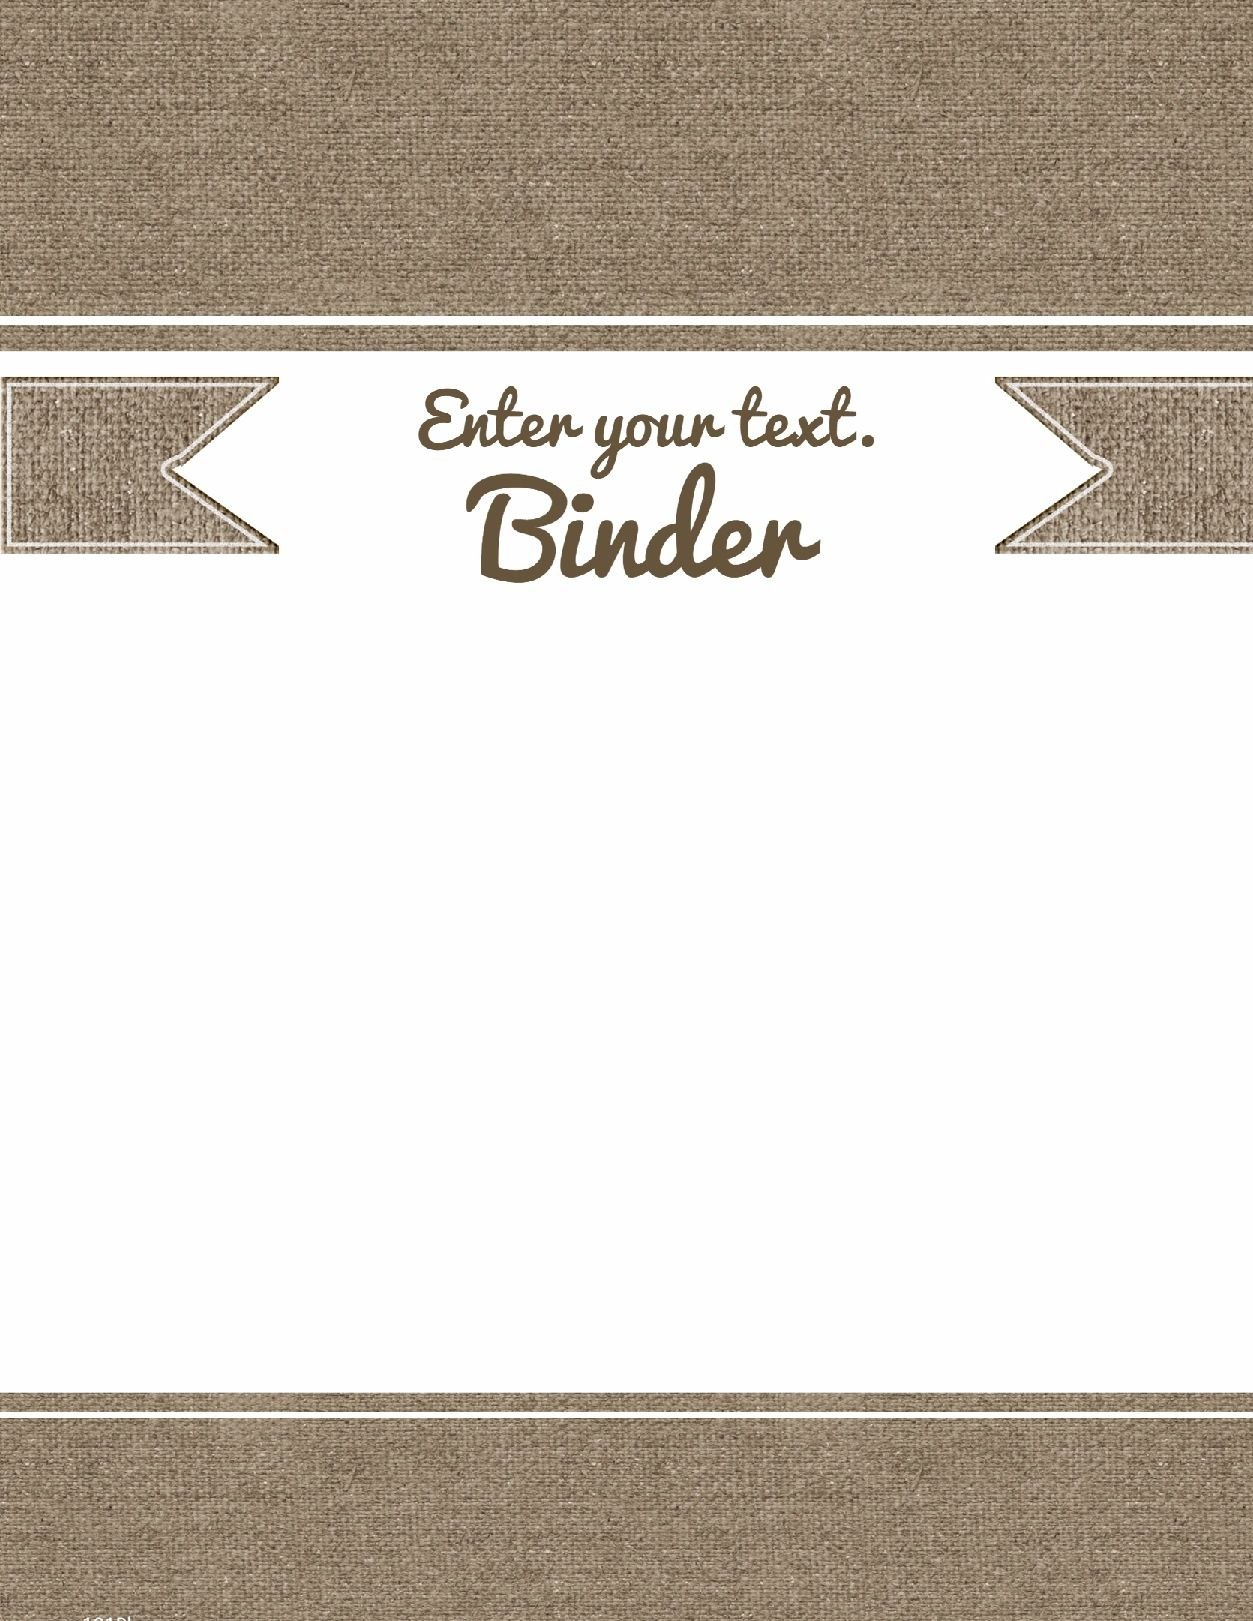 Free Binder Cover Templates  Homeroom  Binder Cover Templates intended for Business Binder Cover Templates